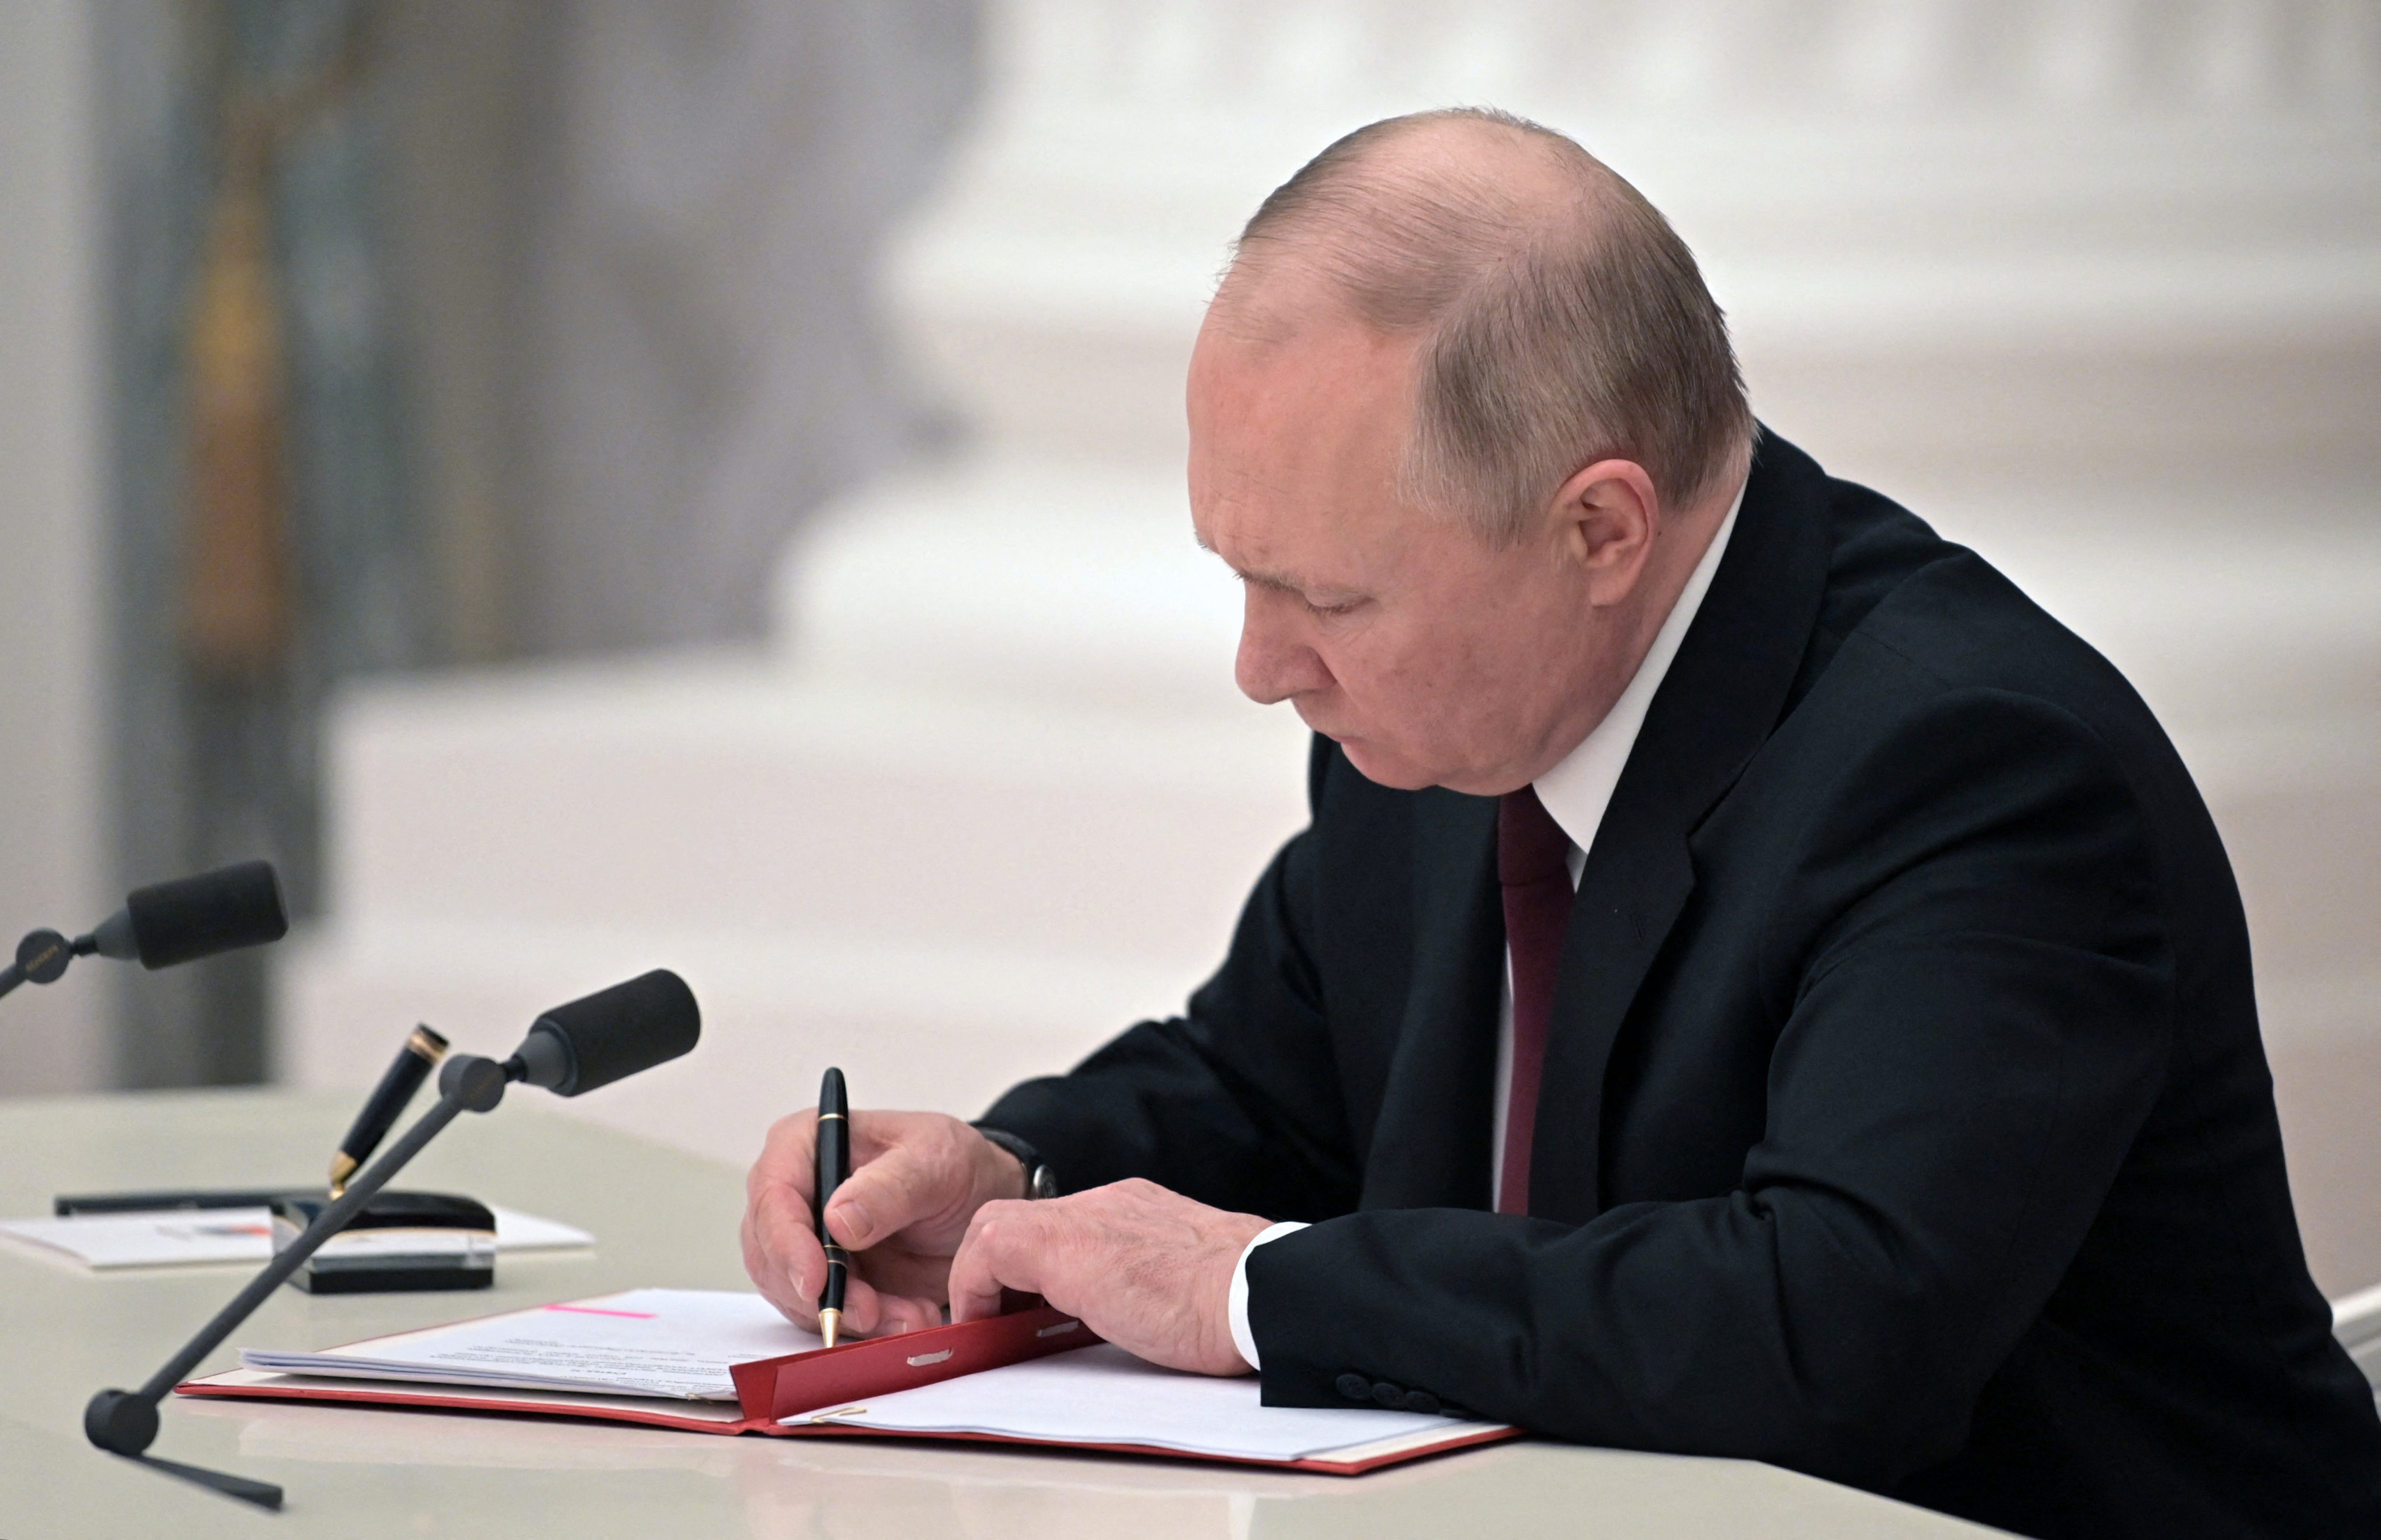 Putin signs documents